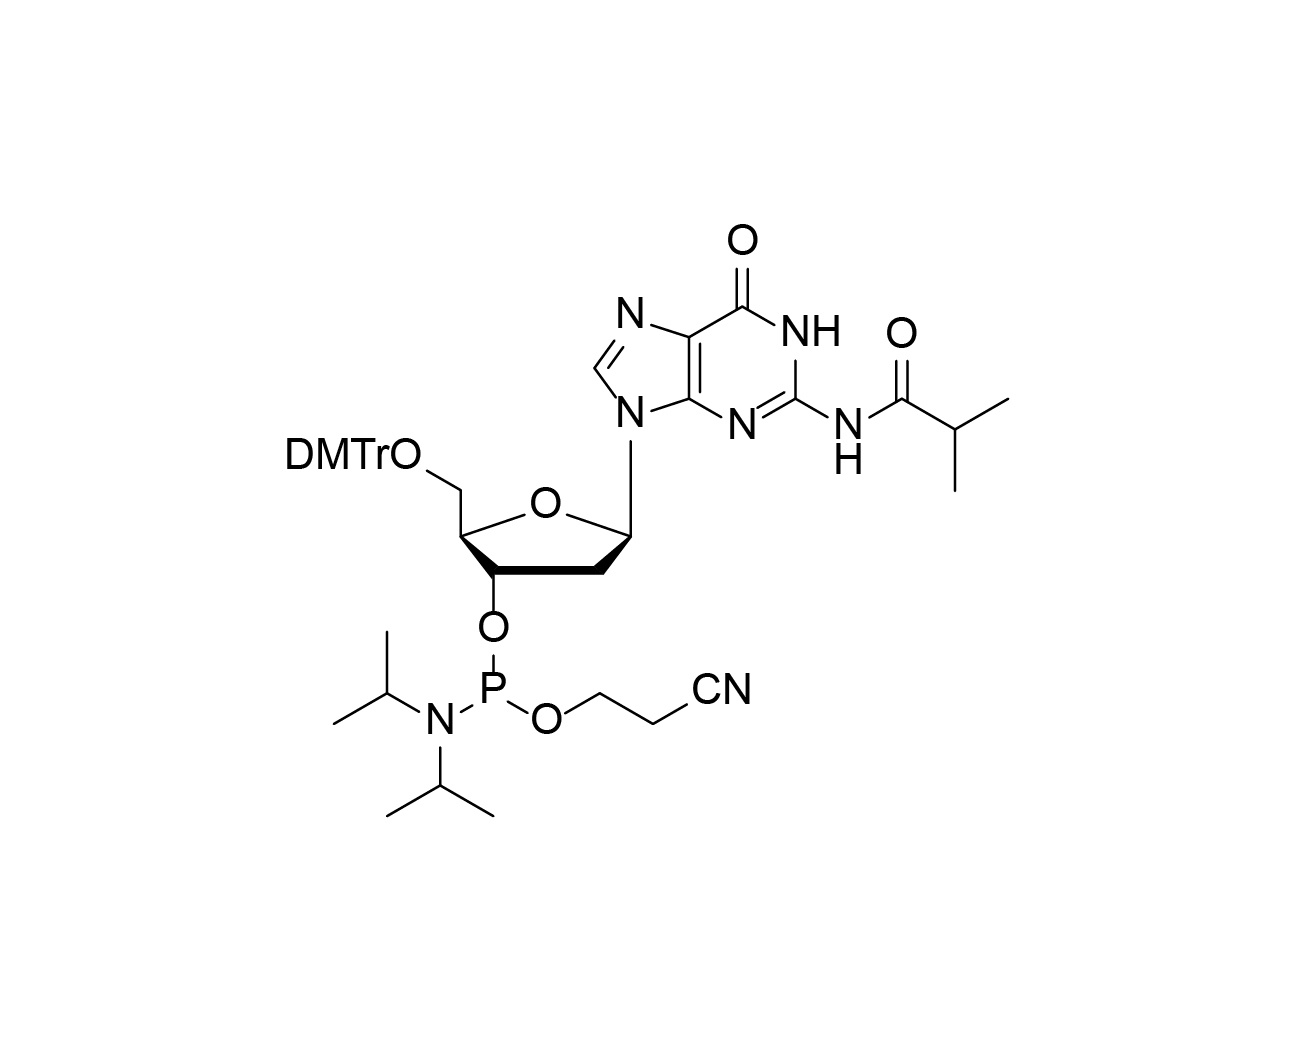 DMTr-dG(iBu)-3'-CE-Phosphoramidite